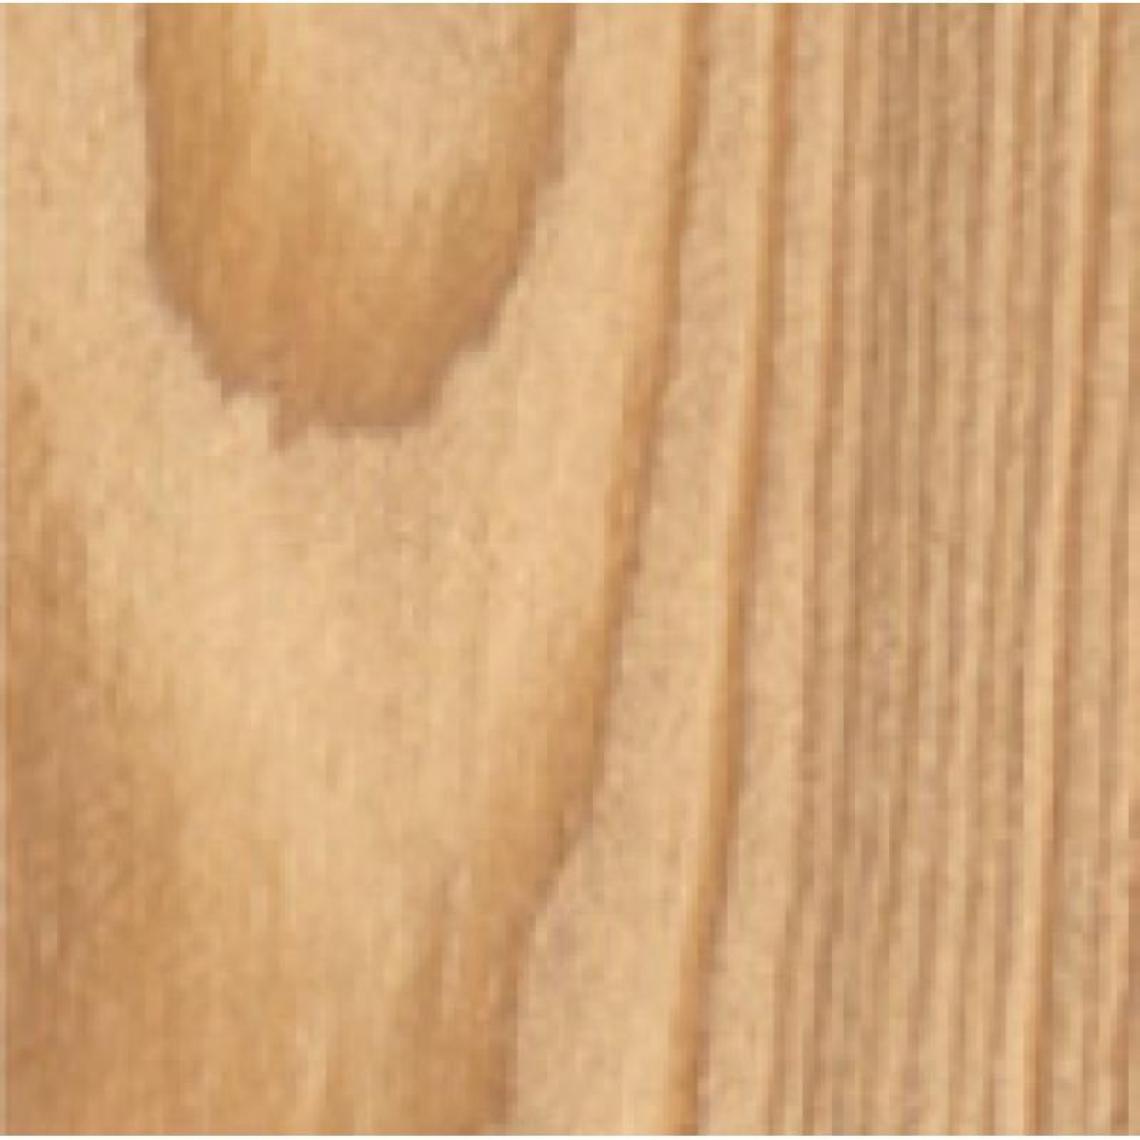 Blanchon - Lasure acrylique polyuréthane Tech-Wood, teinte chêne moyen, bidon de - Produit de finition pour bois